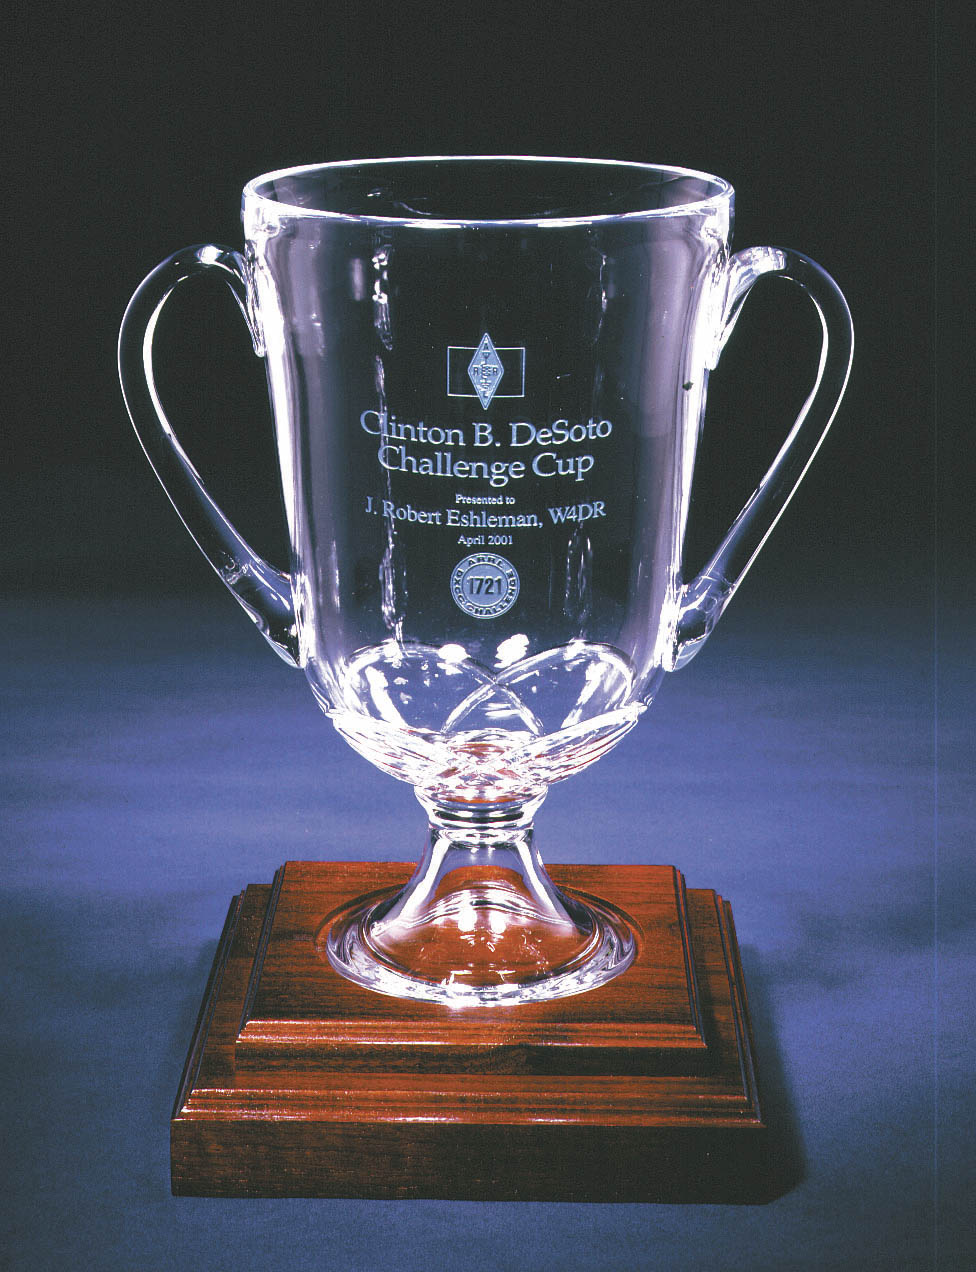 DeSoto Trophy